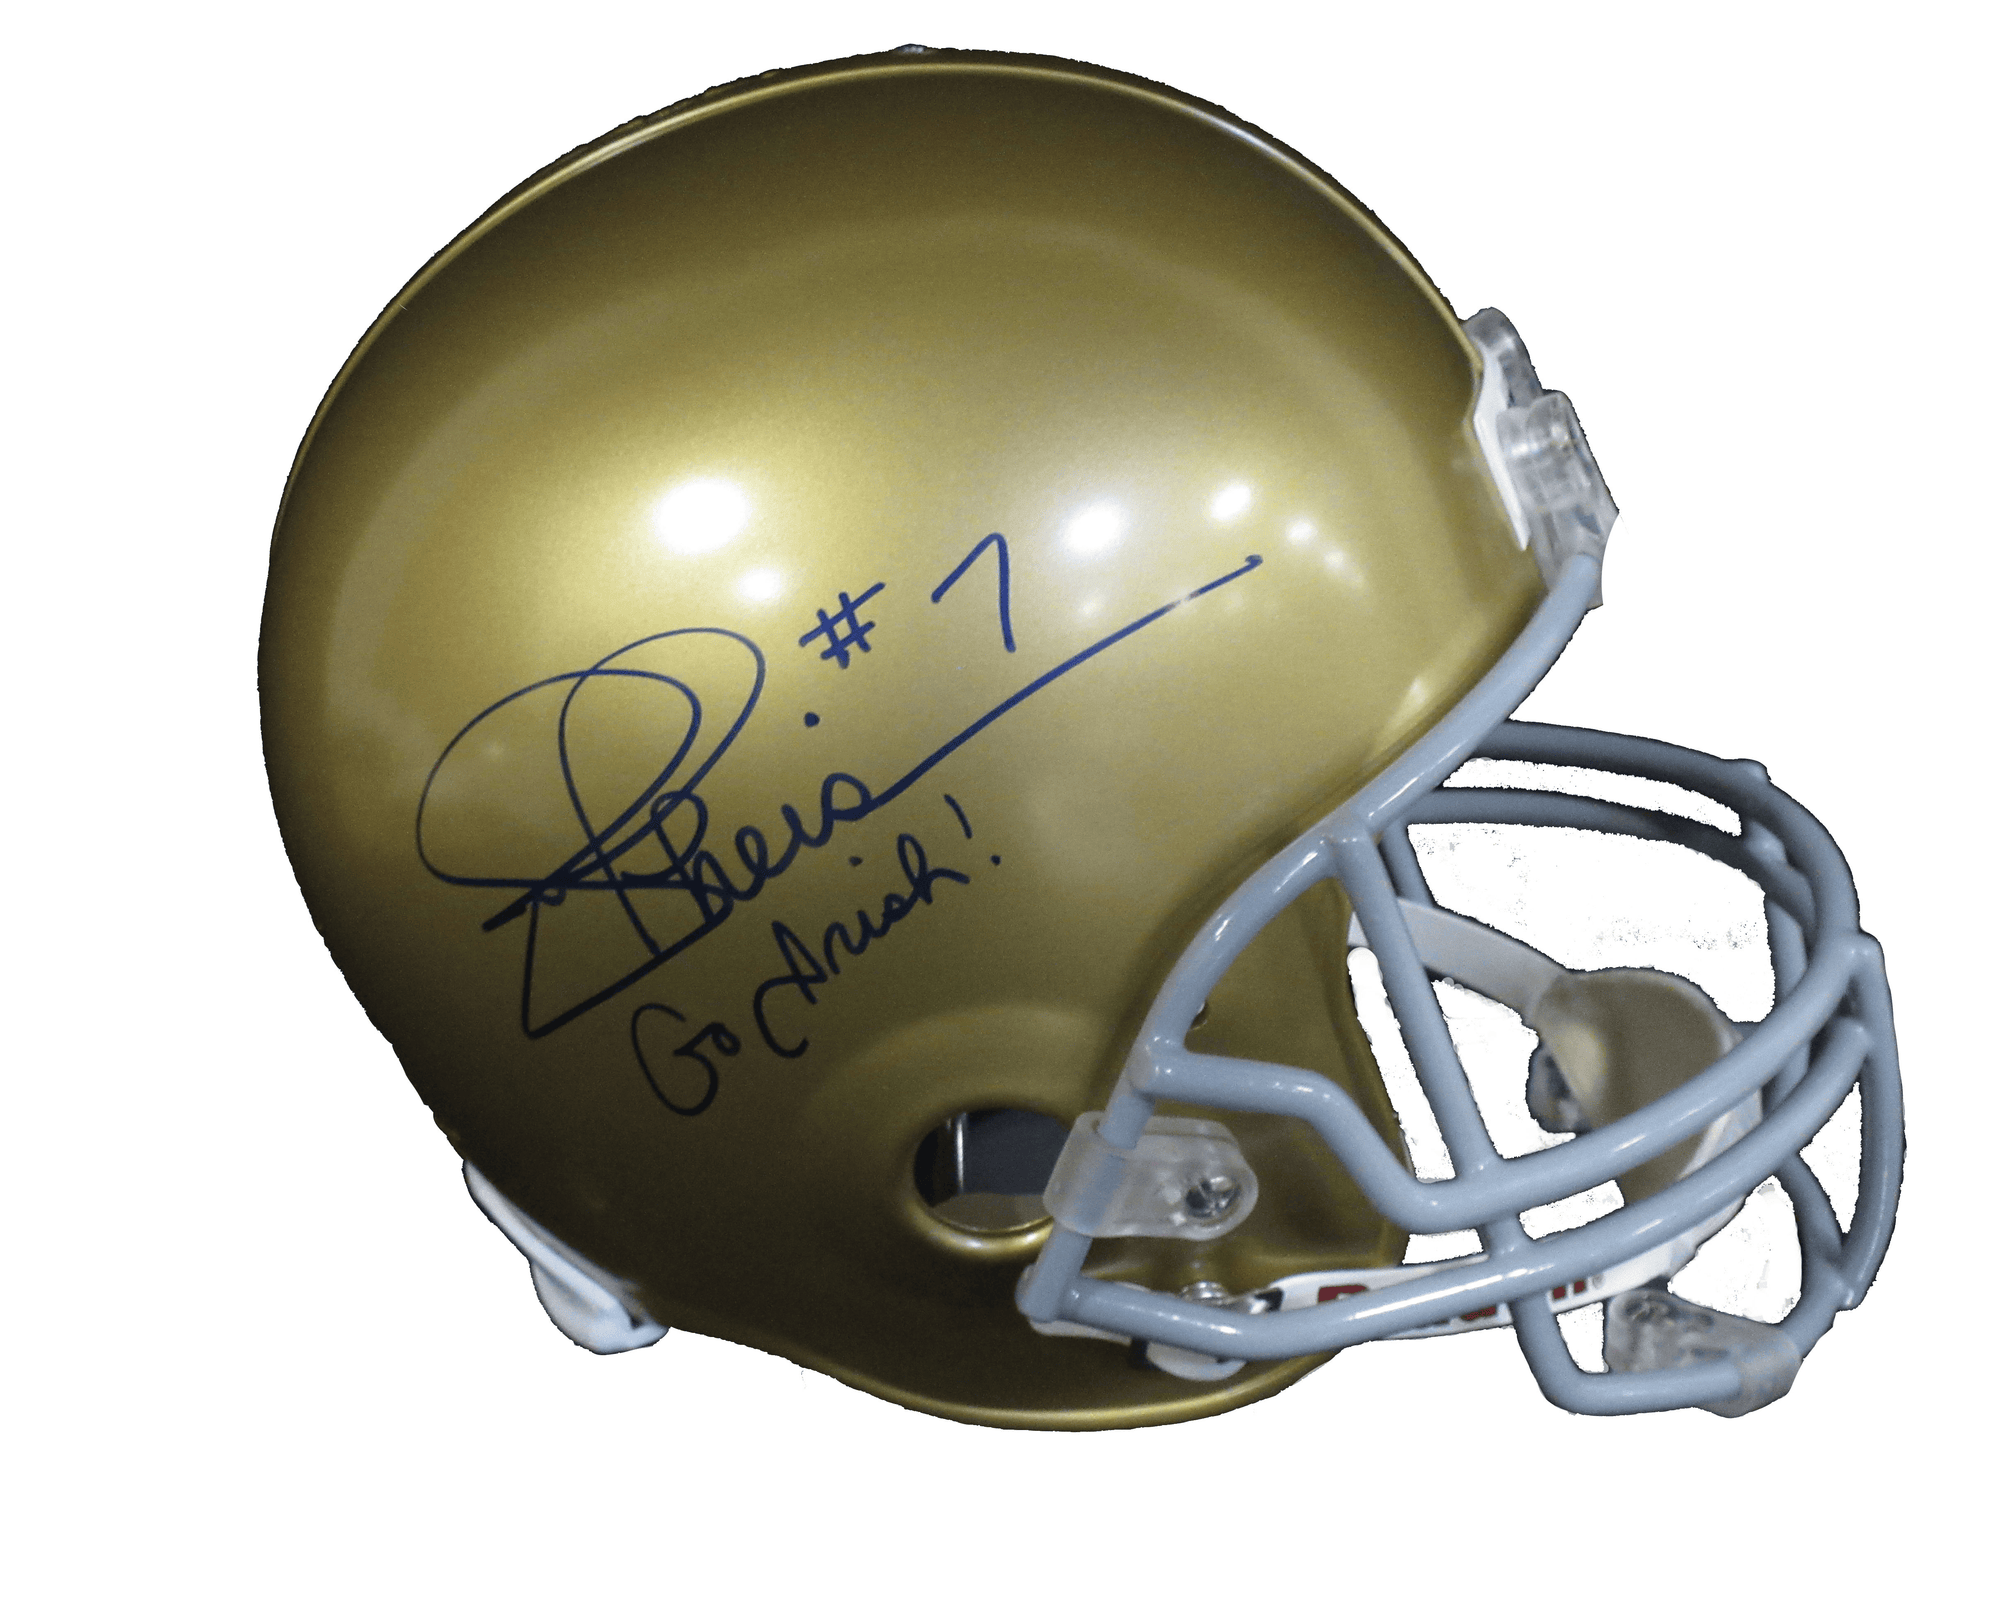 Joe Theismann Notre Dame Autographed "Go Irish" FS Replica Helmet